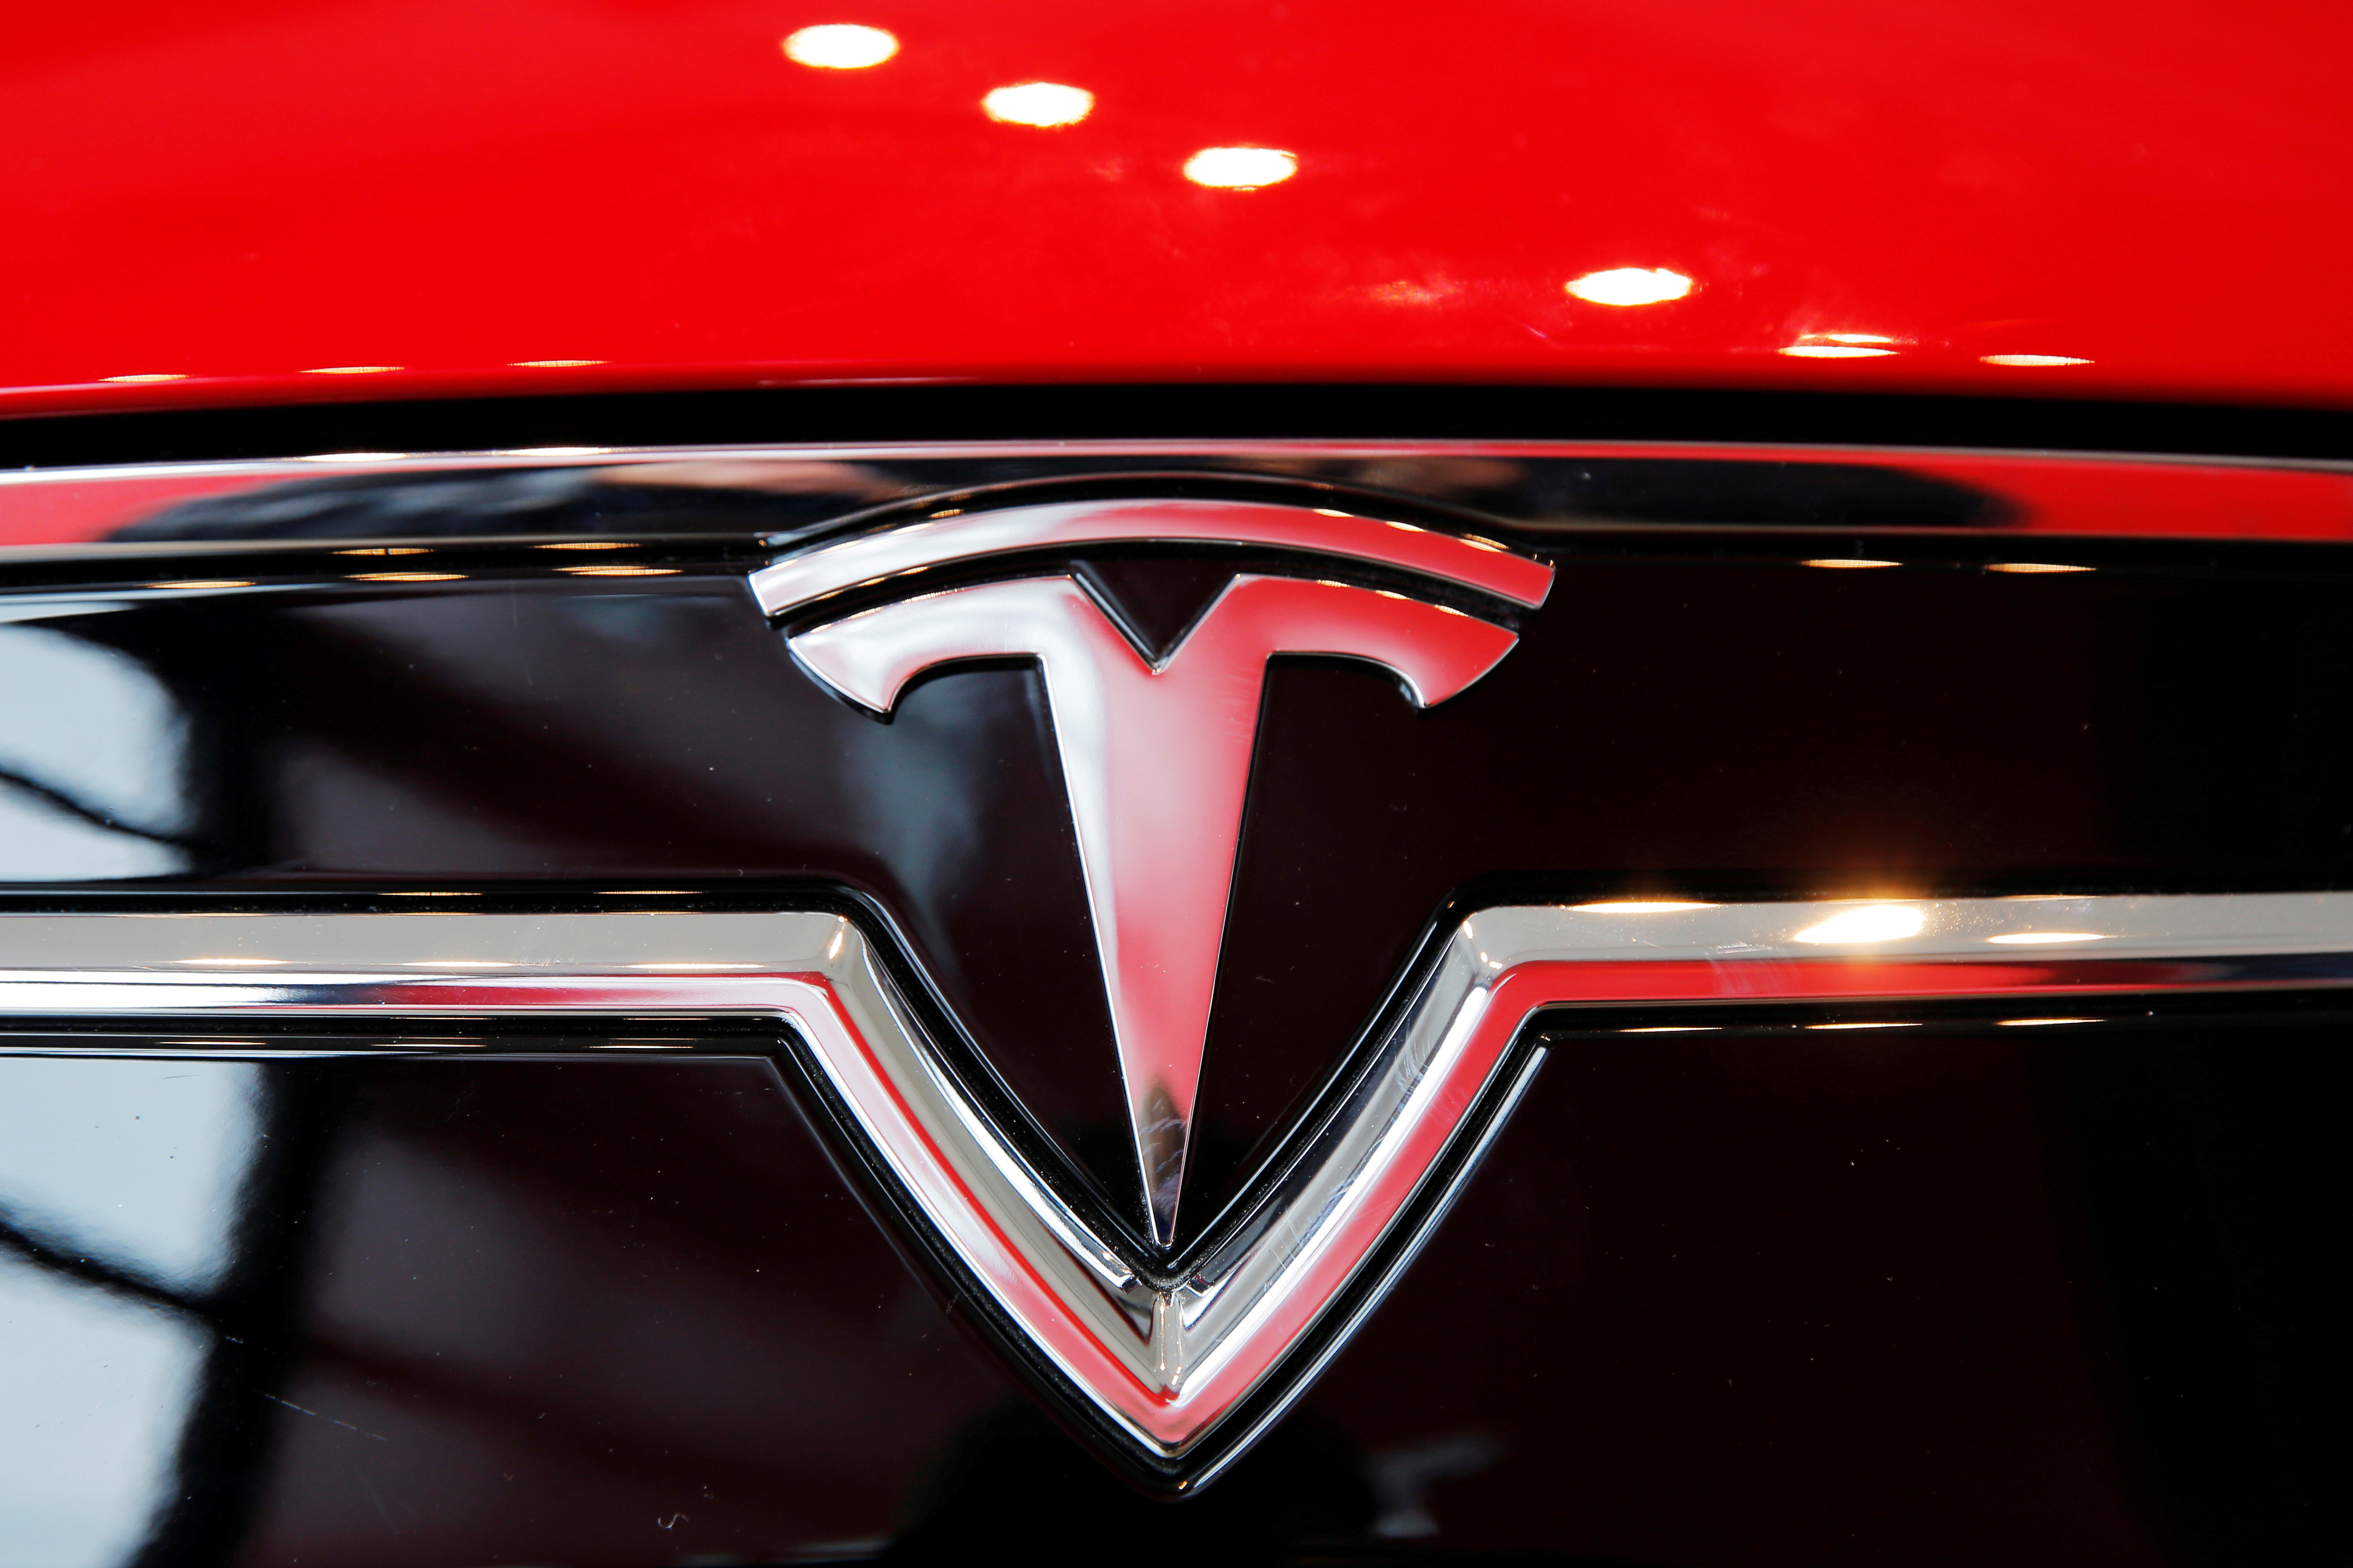 A Tesla logo on a Model S is photographed inside of a Tesla dealership in New York, U.S., April 29, 2016. REUTERS/Lucas Jackson/File Photo